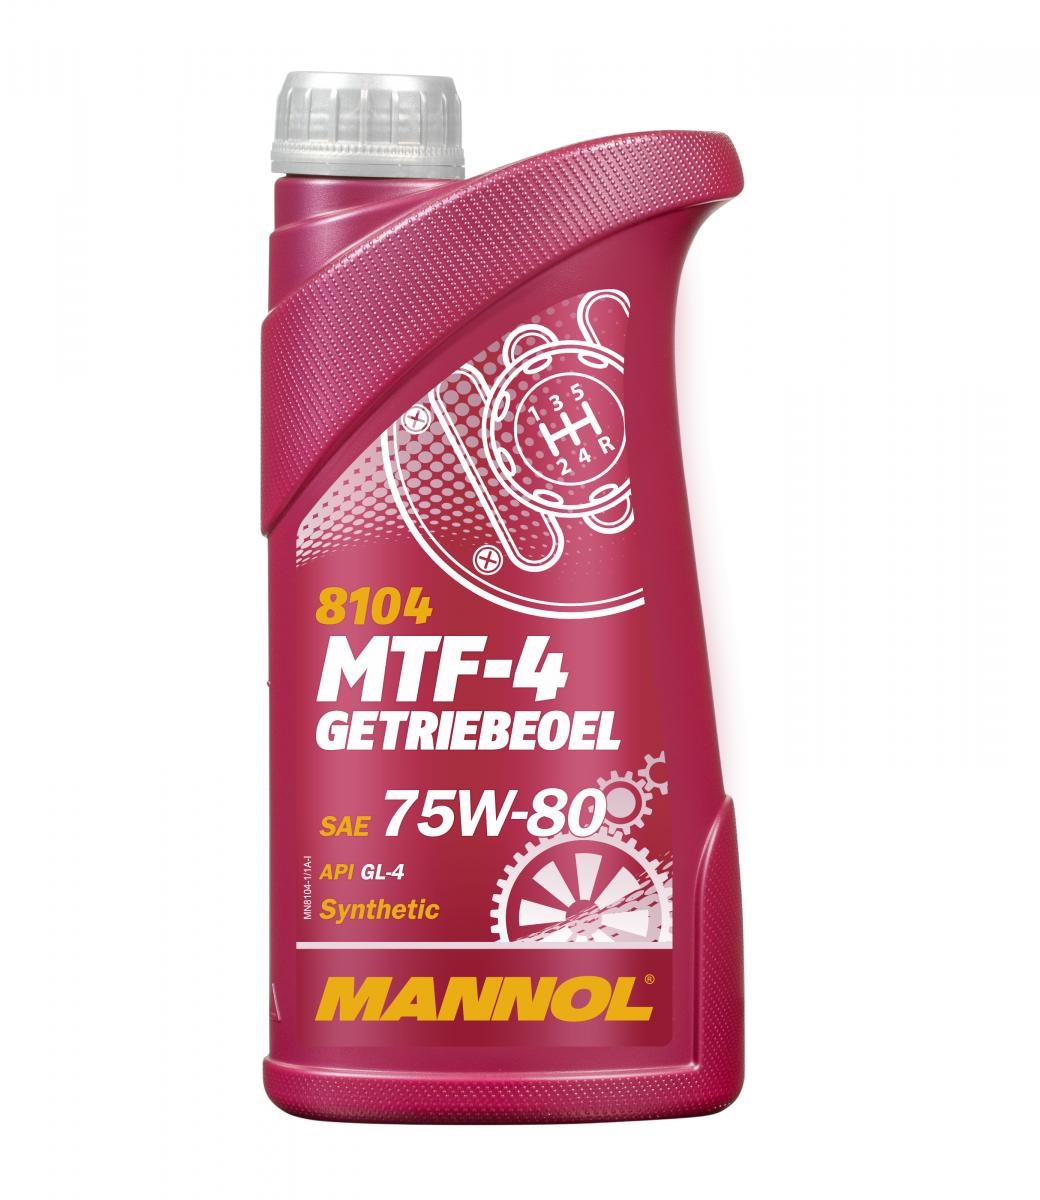 MANNOL MTF-4, GL-4 MN8104-1 KANDA Getriebeöl Motorrad zum günstigen Preis